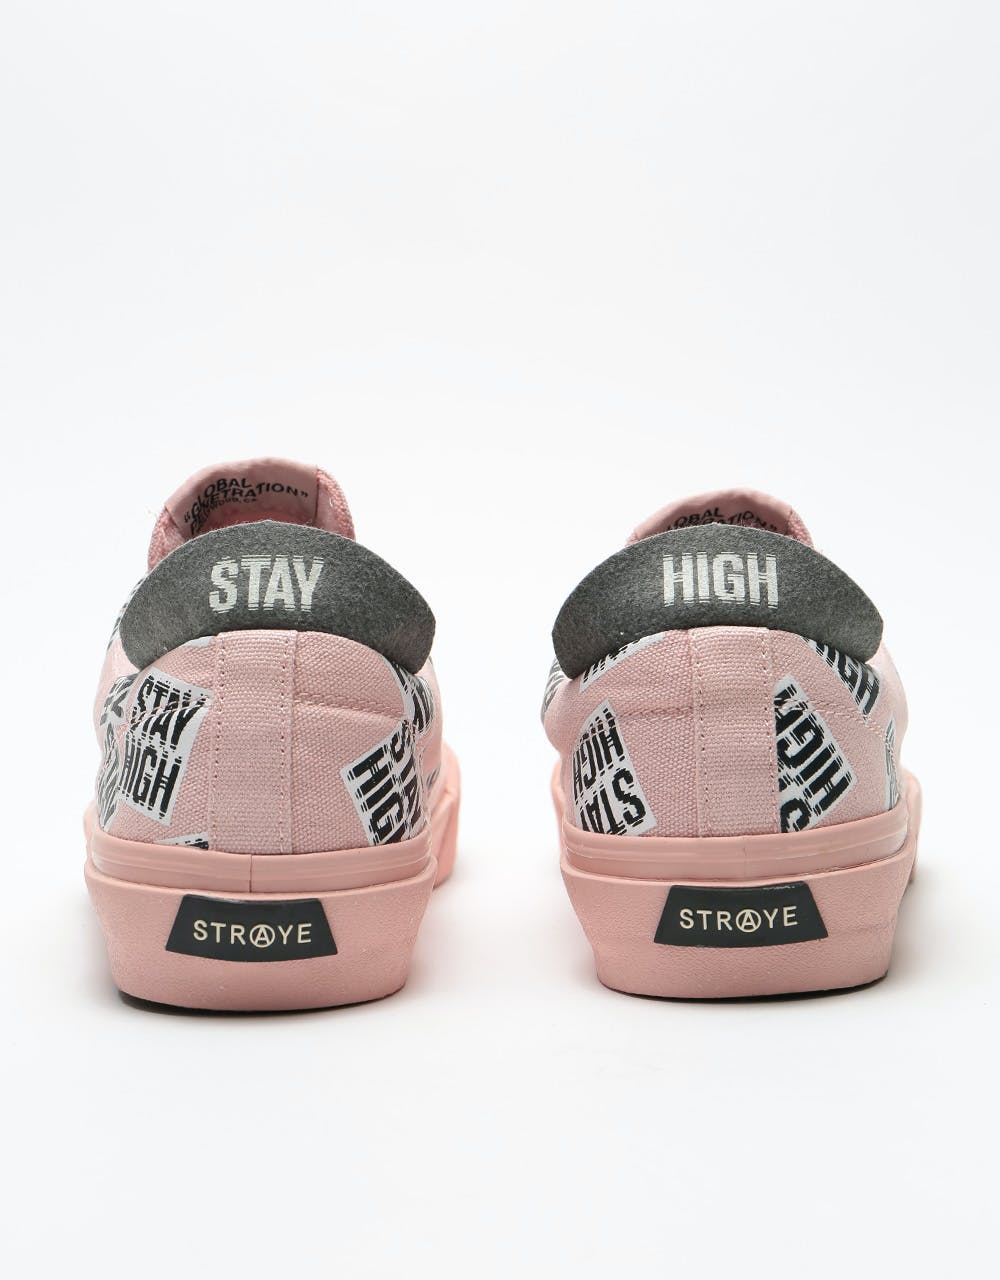 Straye Stanley Skate Shoes - Stay High